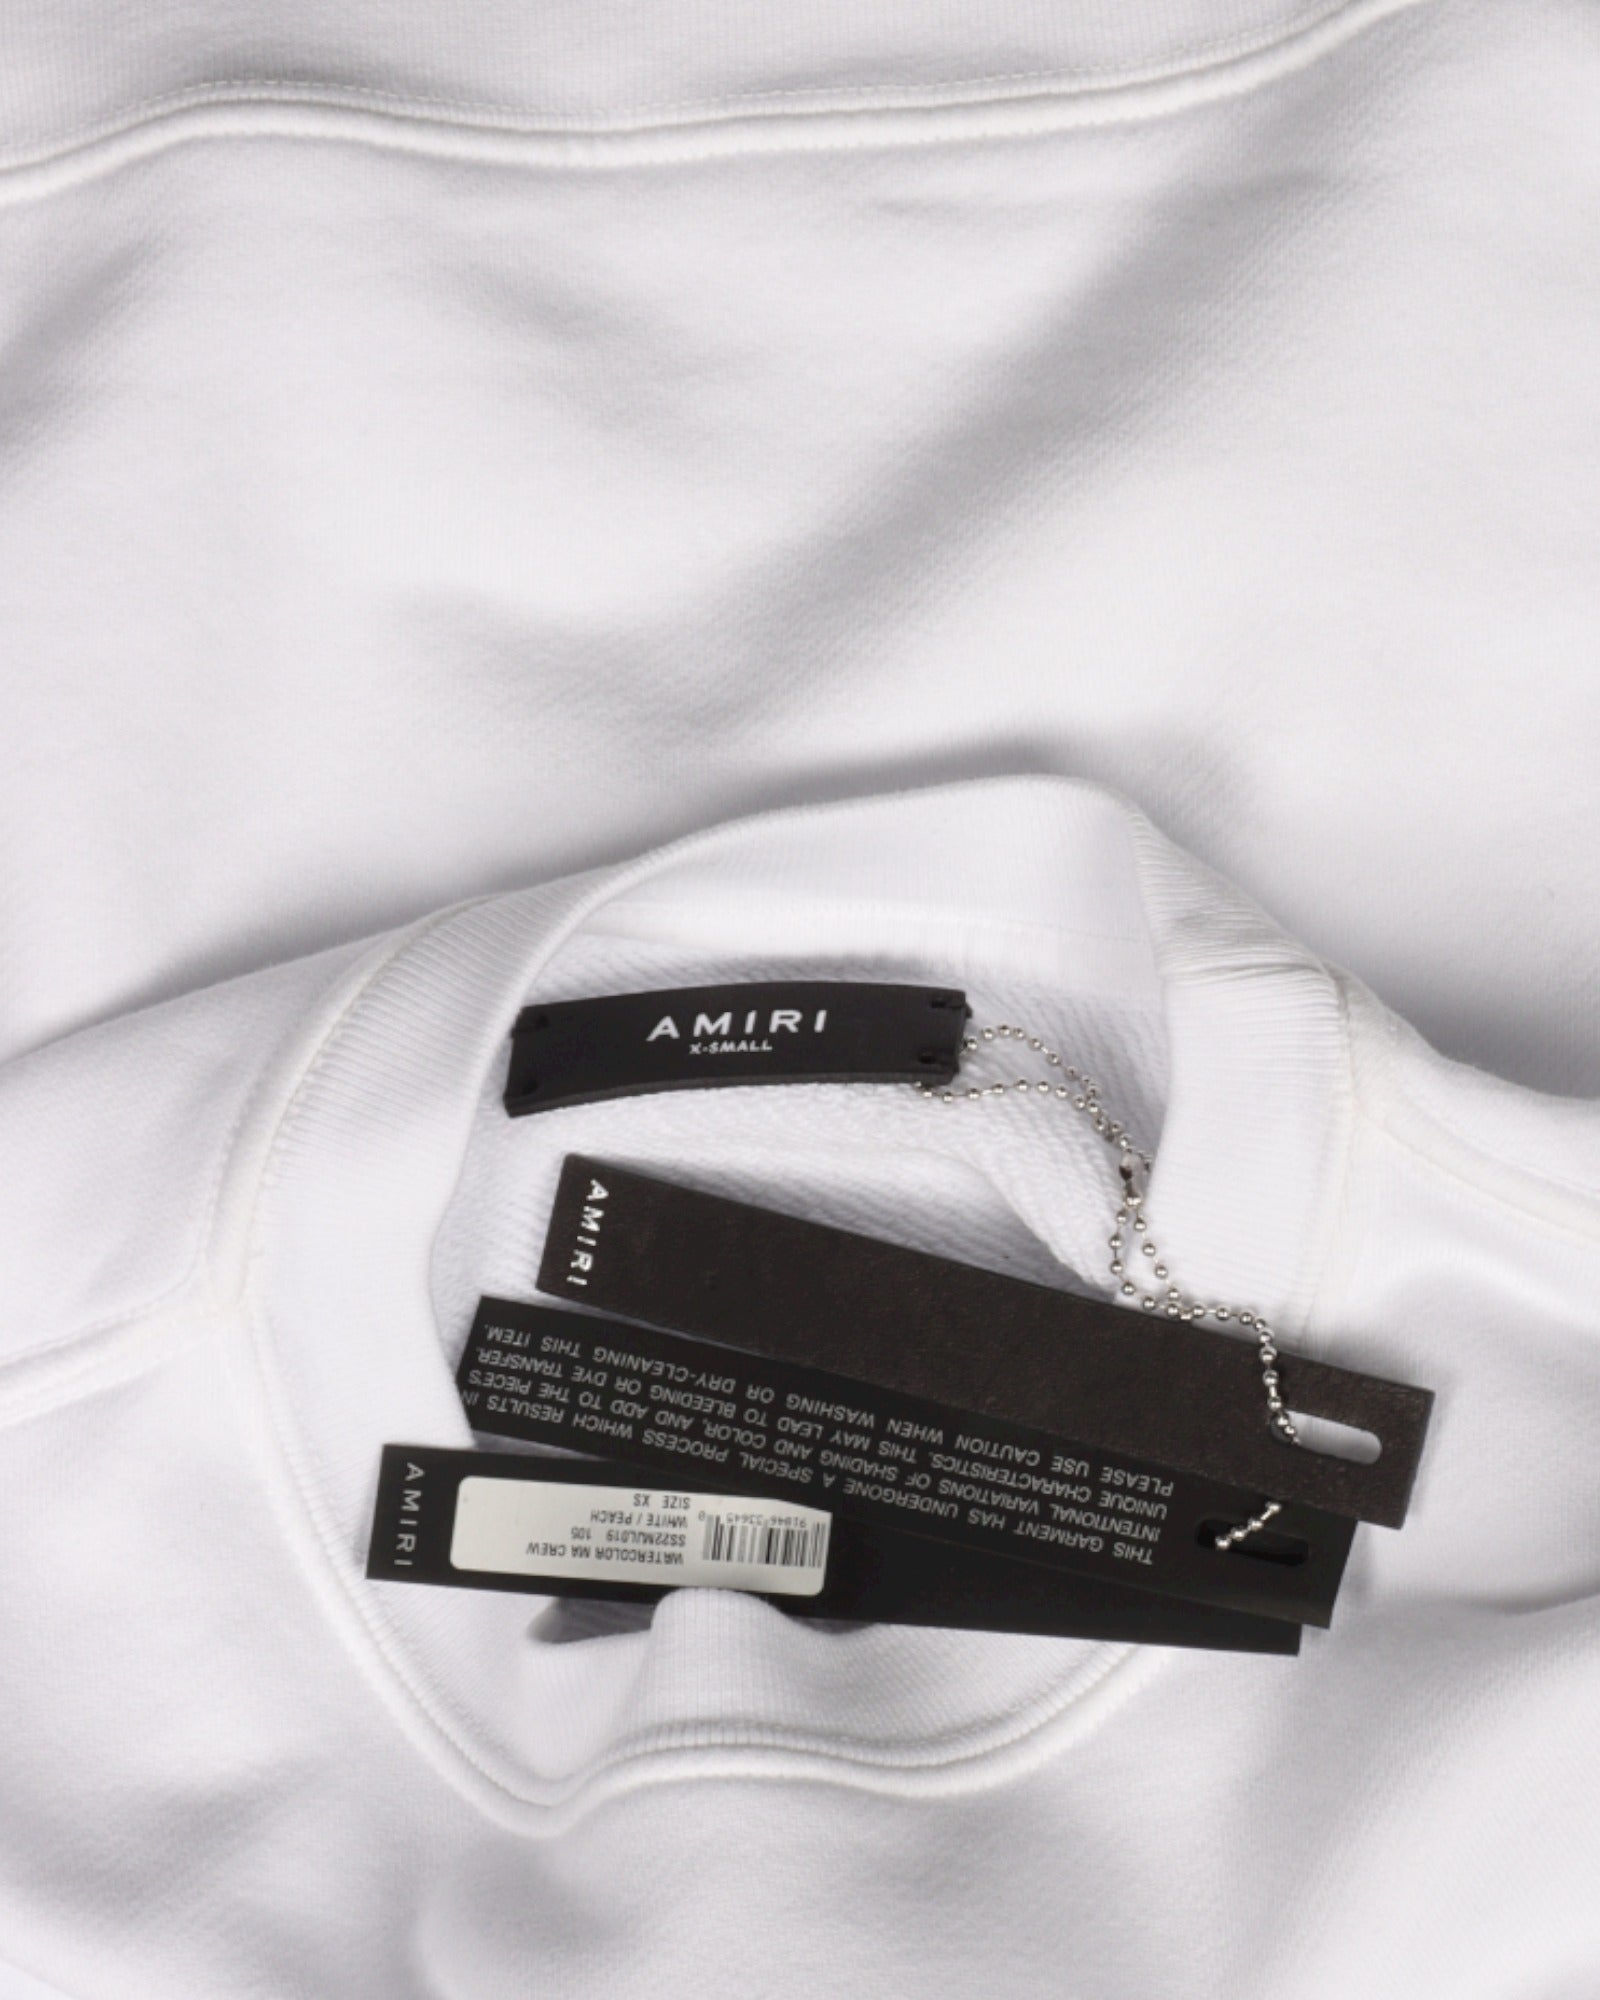 AMIRI Watercolor MA T-Shirt Black for Men